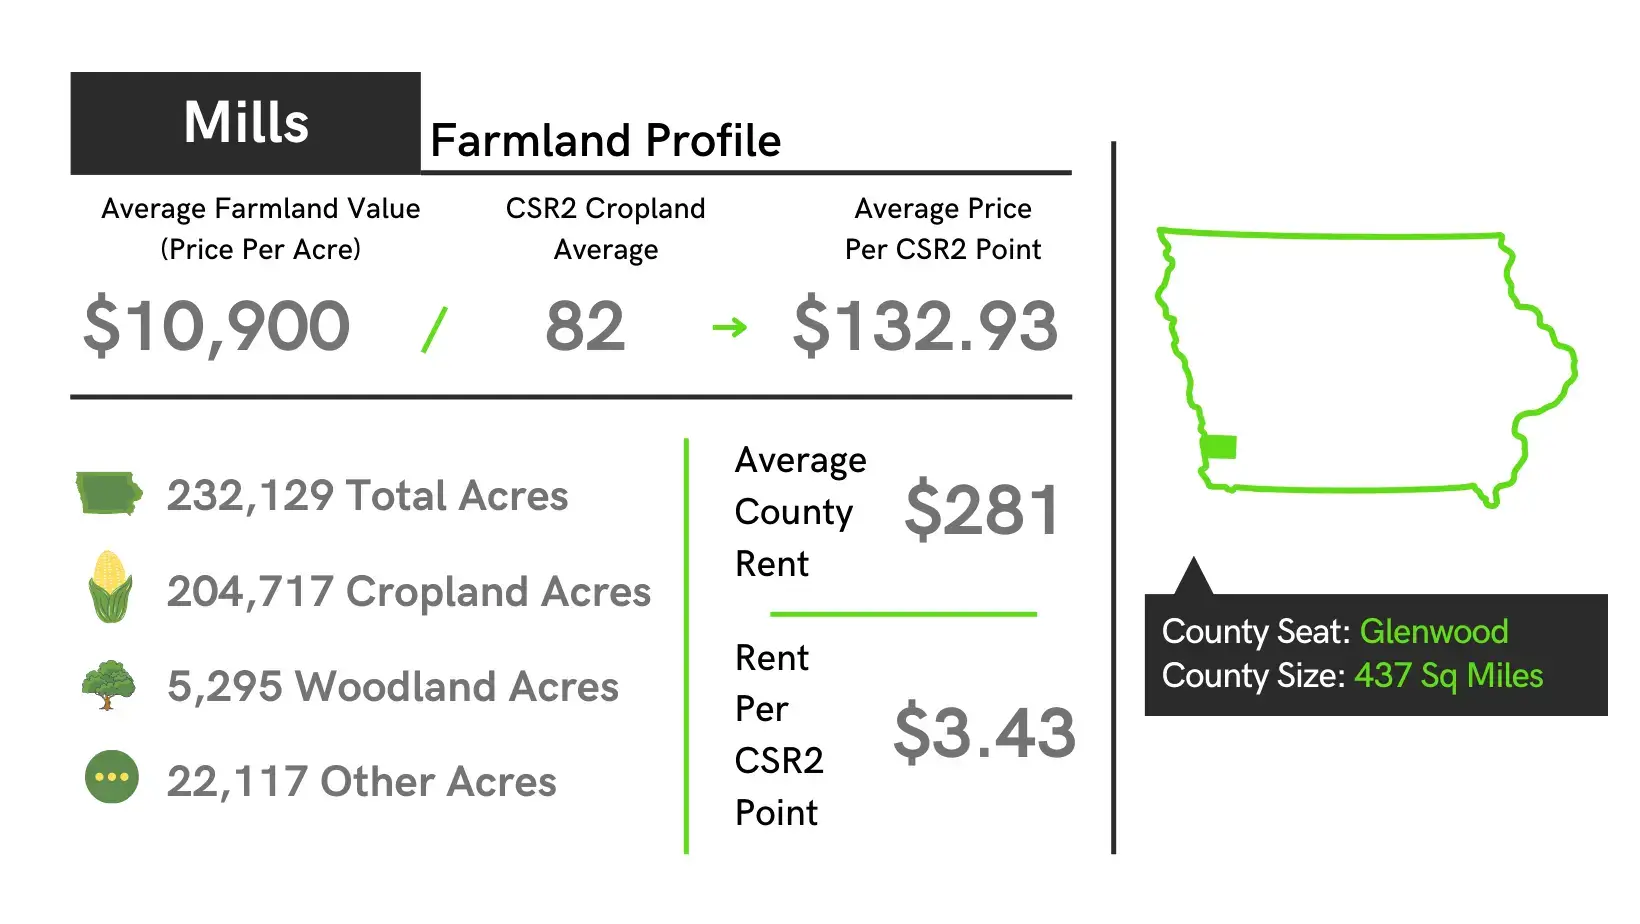 Mills County Farmland Profile